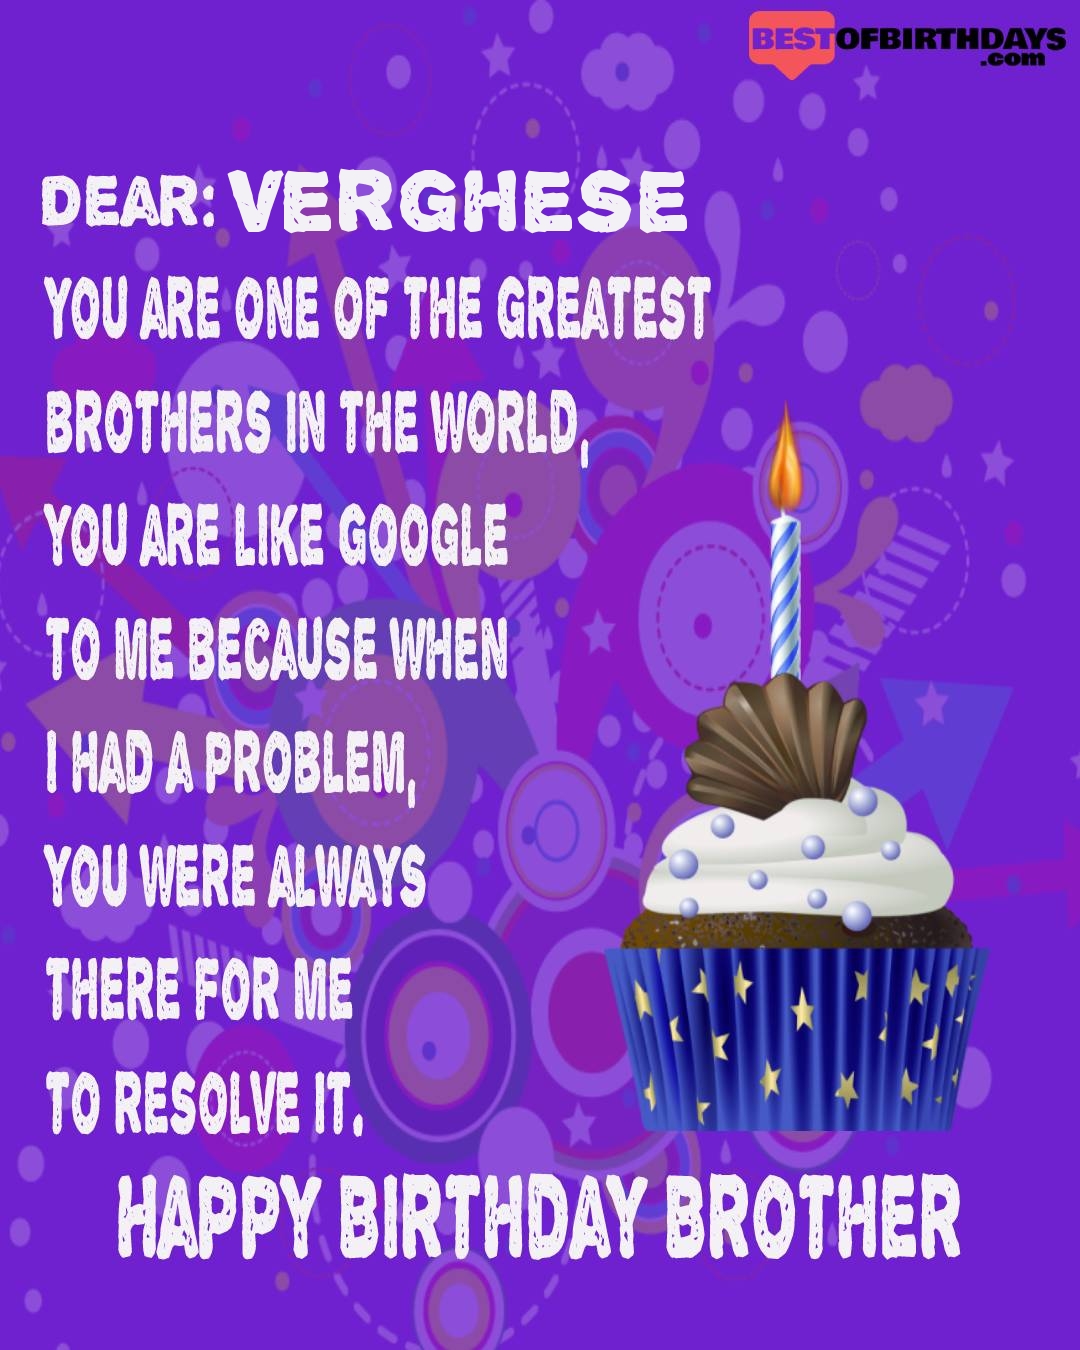 Happy birthday verghese bhai brother bro